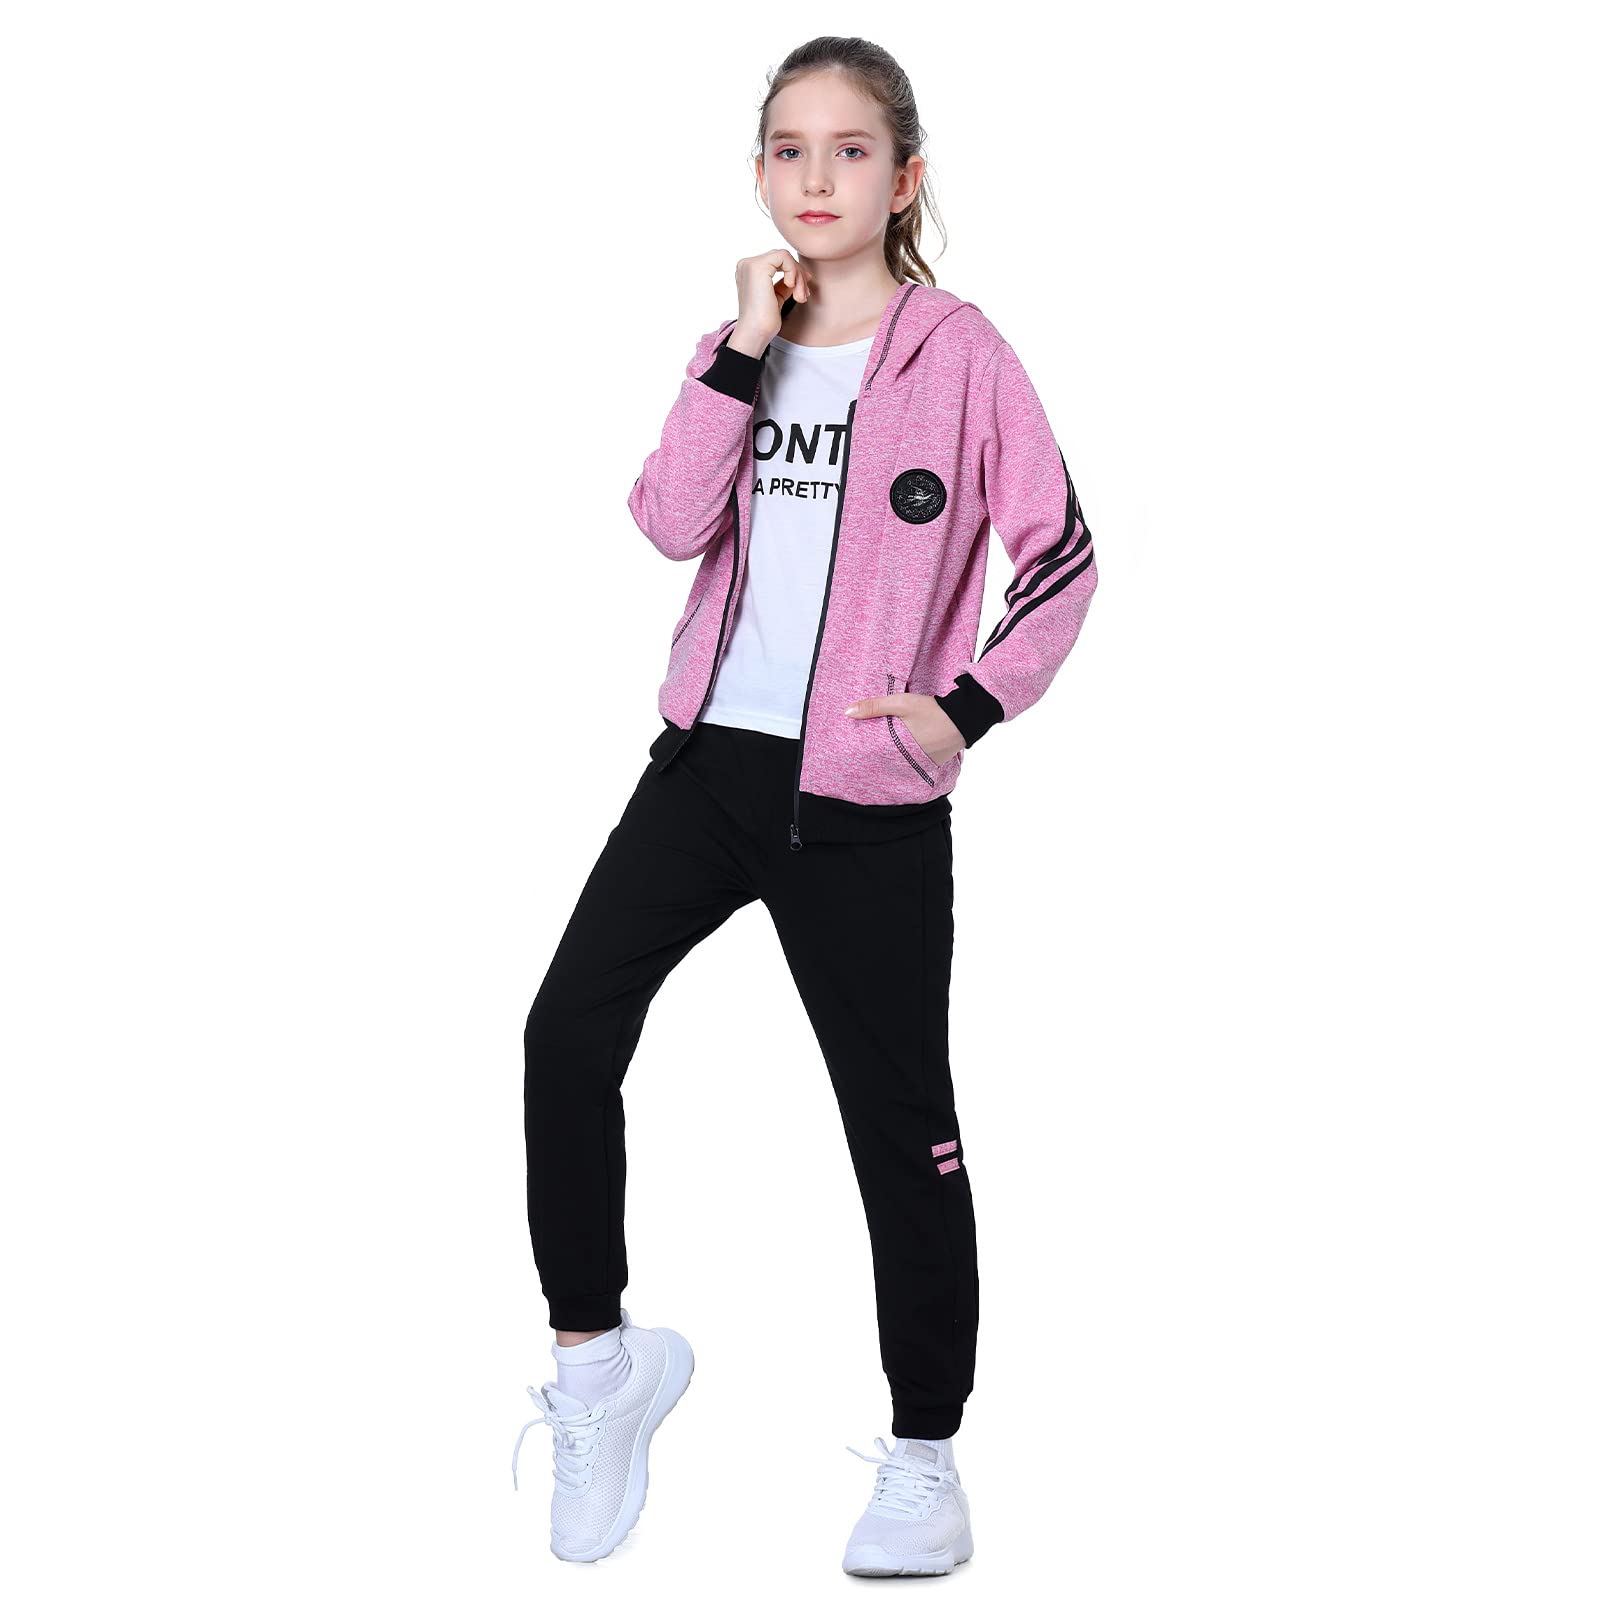 LPATTERN Kinder Mädchen 3tlg Bekleidungsset Sportanzug Trainingsanzug Jogginganzug Freizeitanzug Outfit-Set(Langarmshirt+ Kapuzenjacke+ Sporthose), Pink(3-Teilig), 158-164(Label:170)